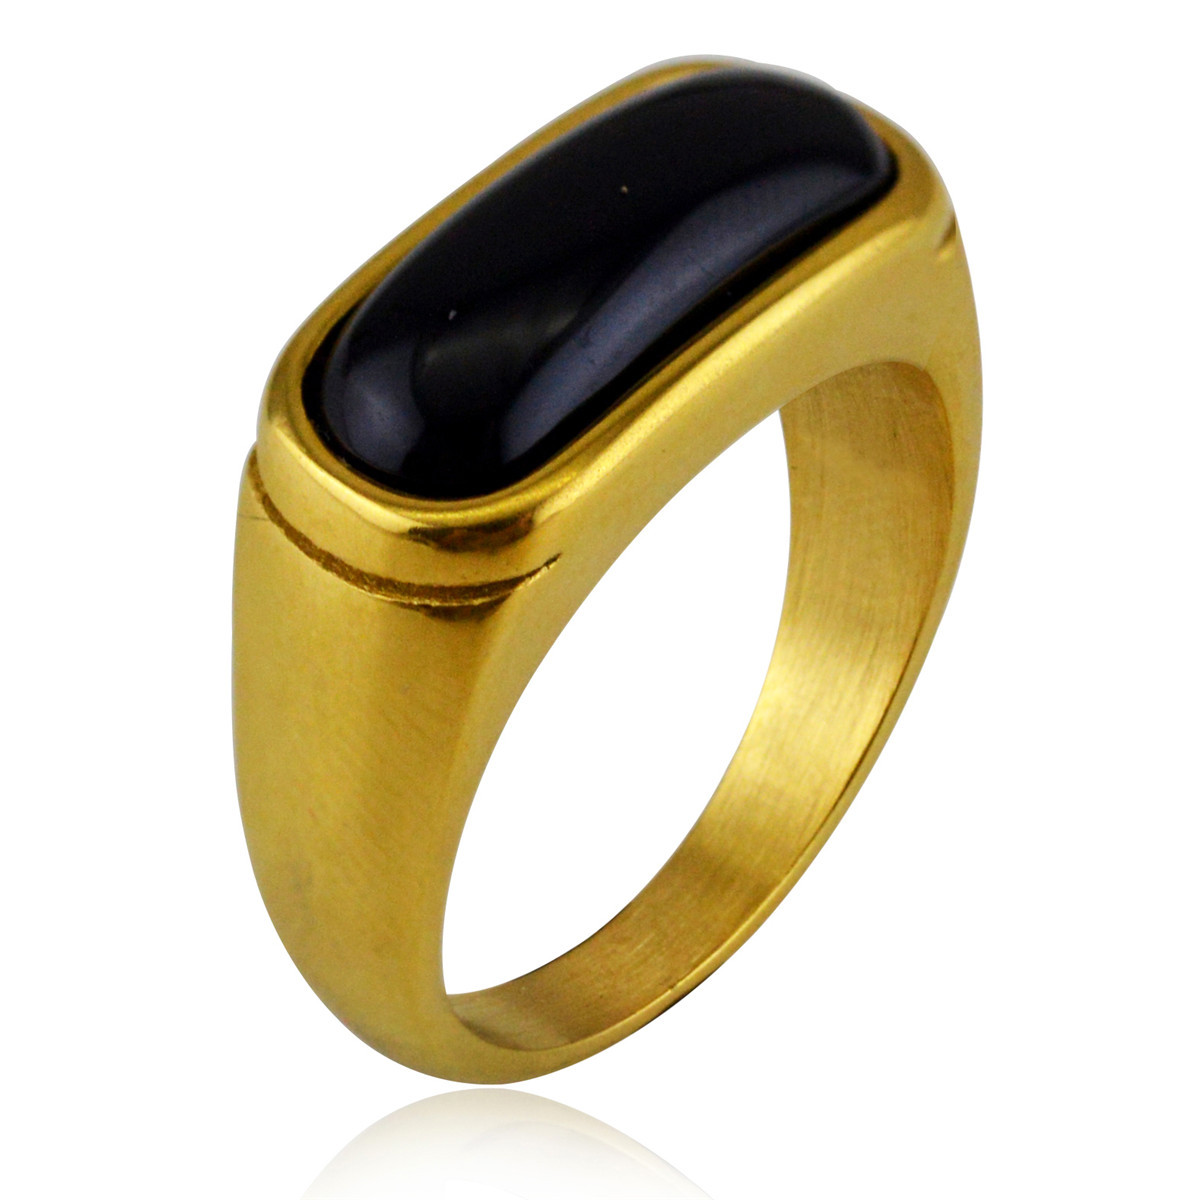 Golden black stone